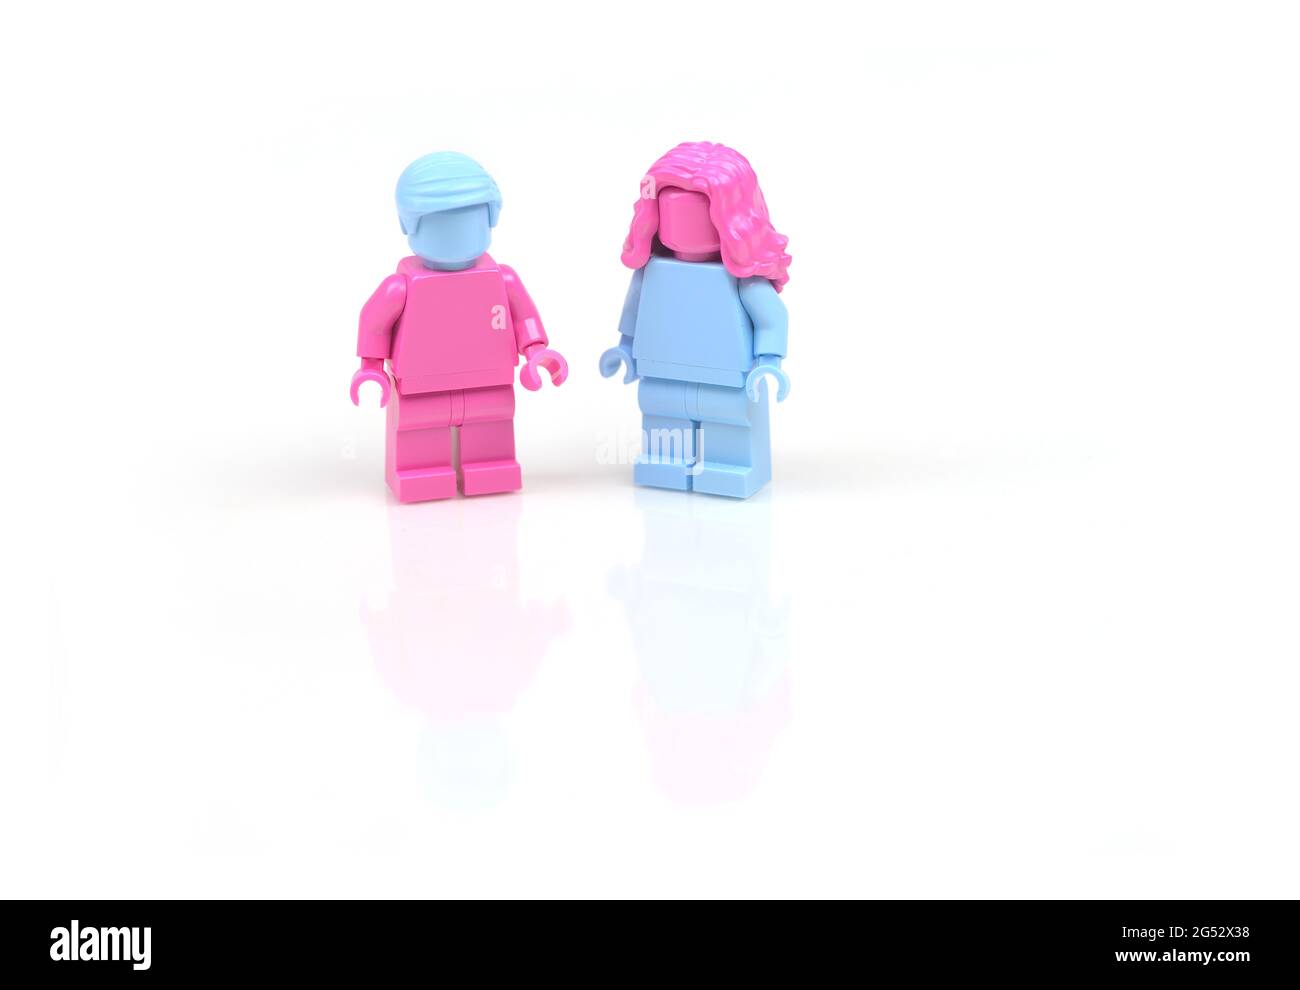 Lego minifigures - transgender / gender fluid concept. Stock Photo